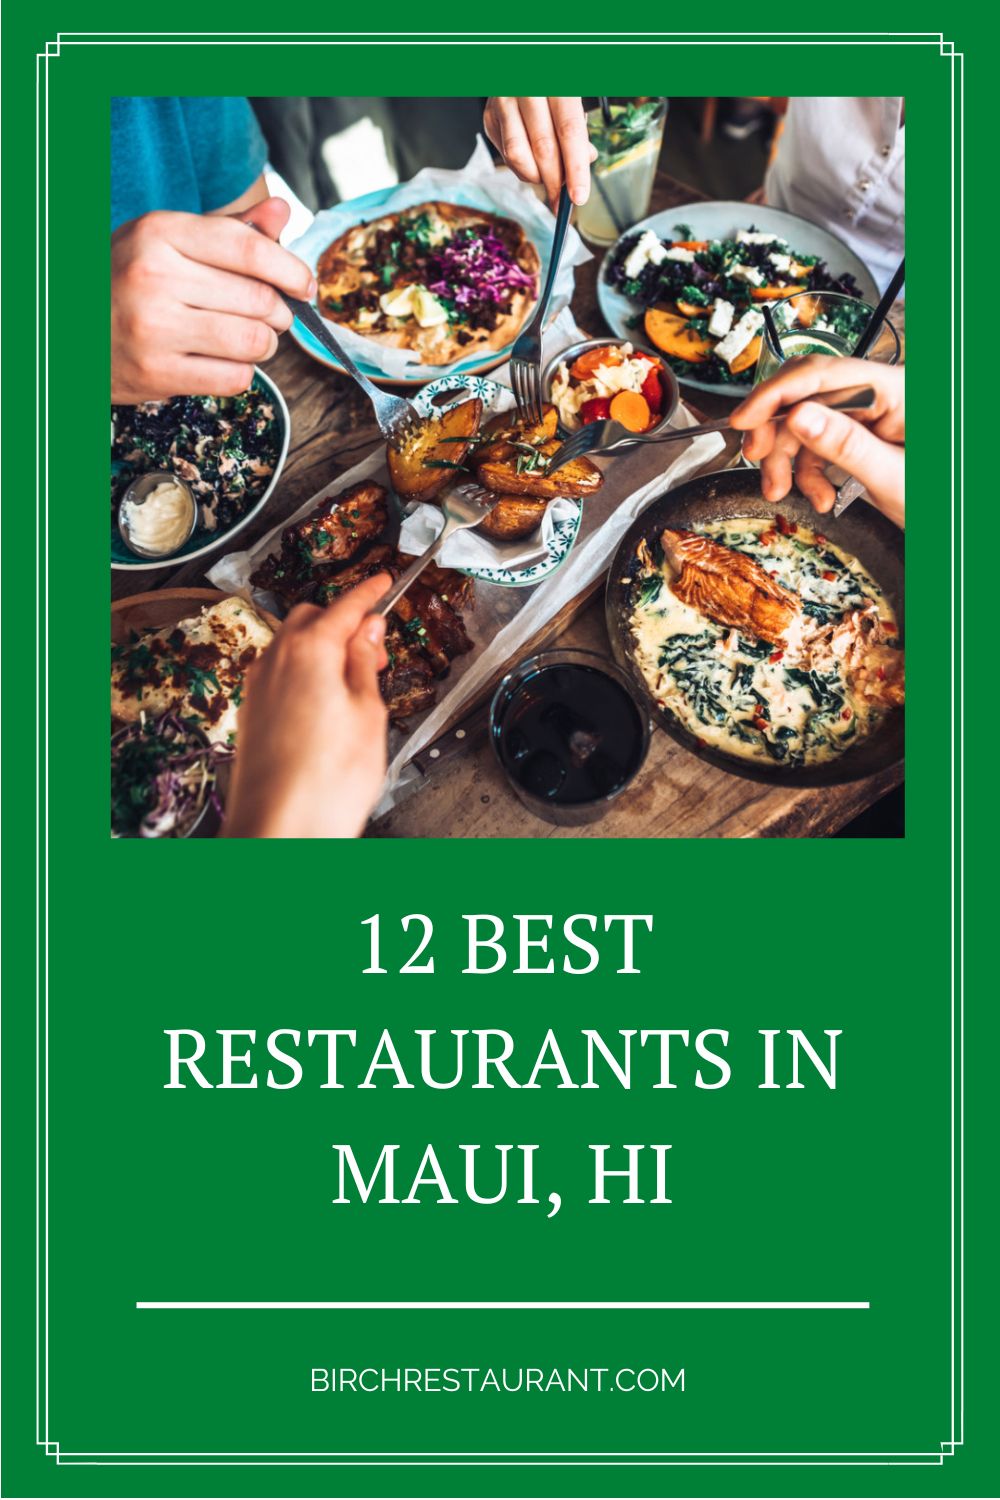 Best Restaurants in Maui